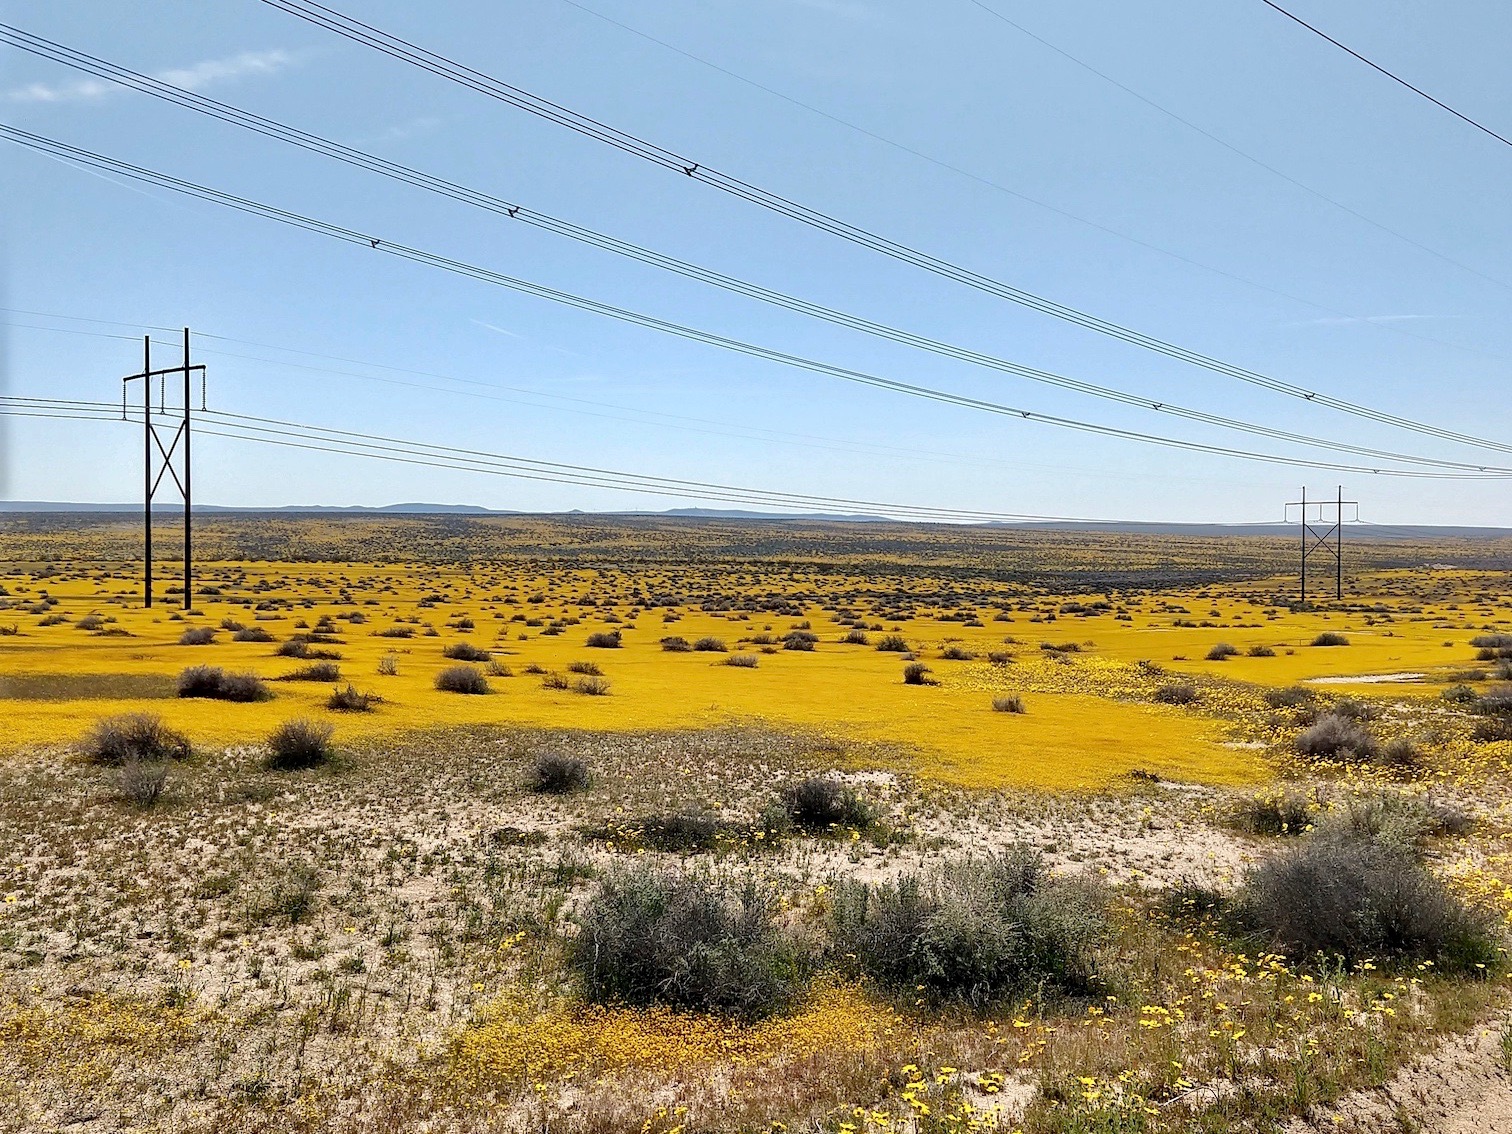 Mojave Desert blanketed in yellow flowers